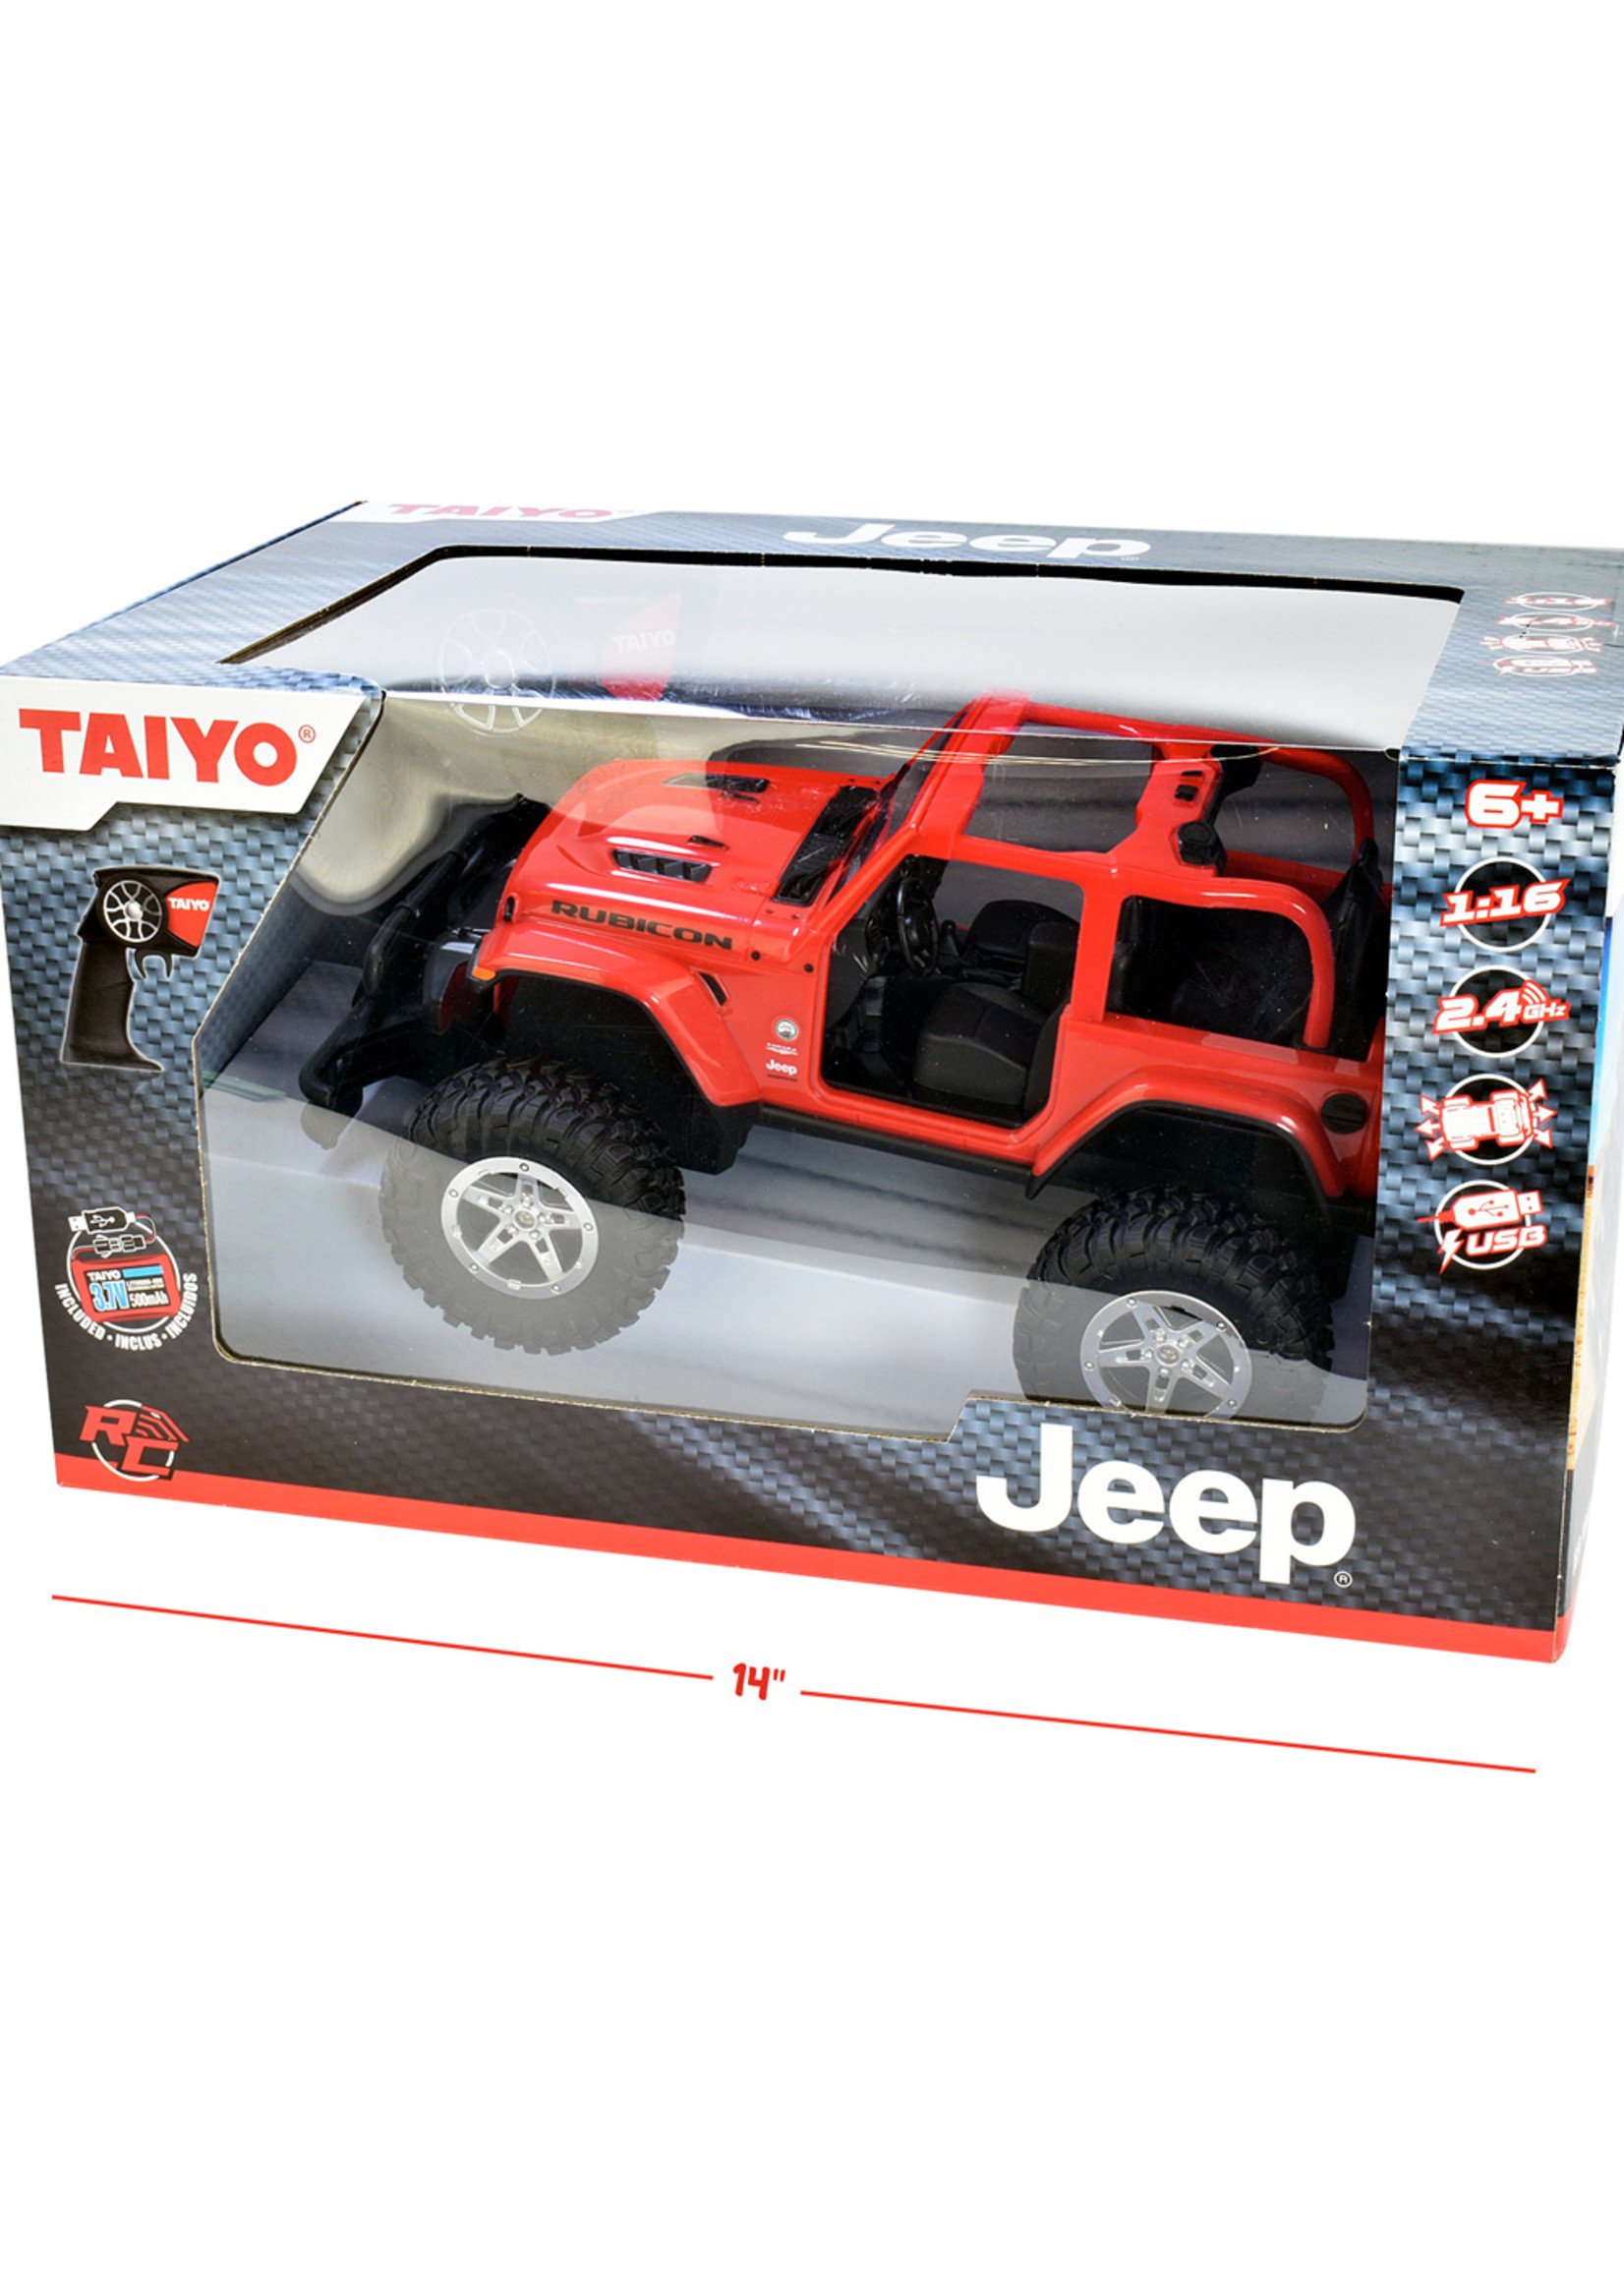 Thin Air T541 - 1/16 Taiyo Jeep Wrangler Rubicon RC - Hub Hobby